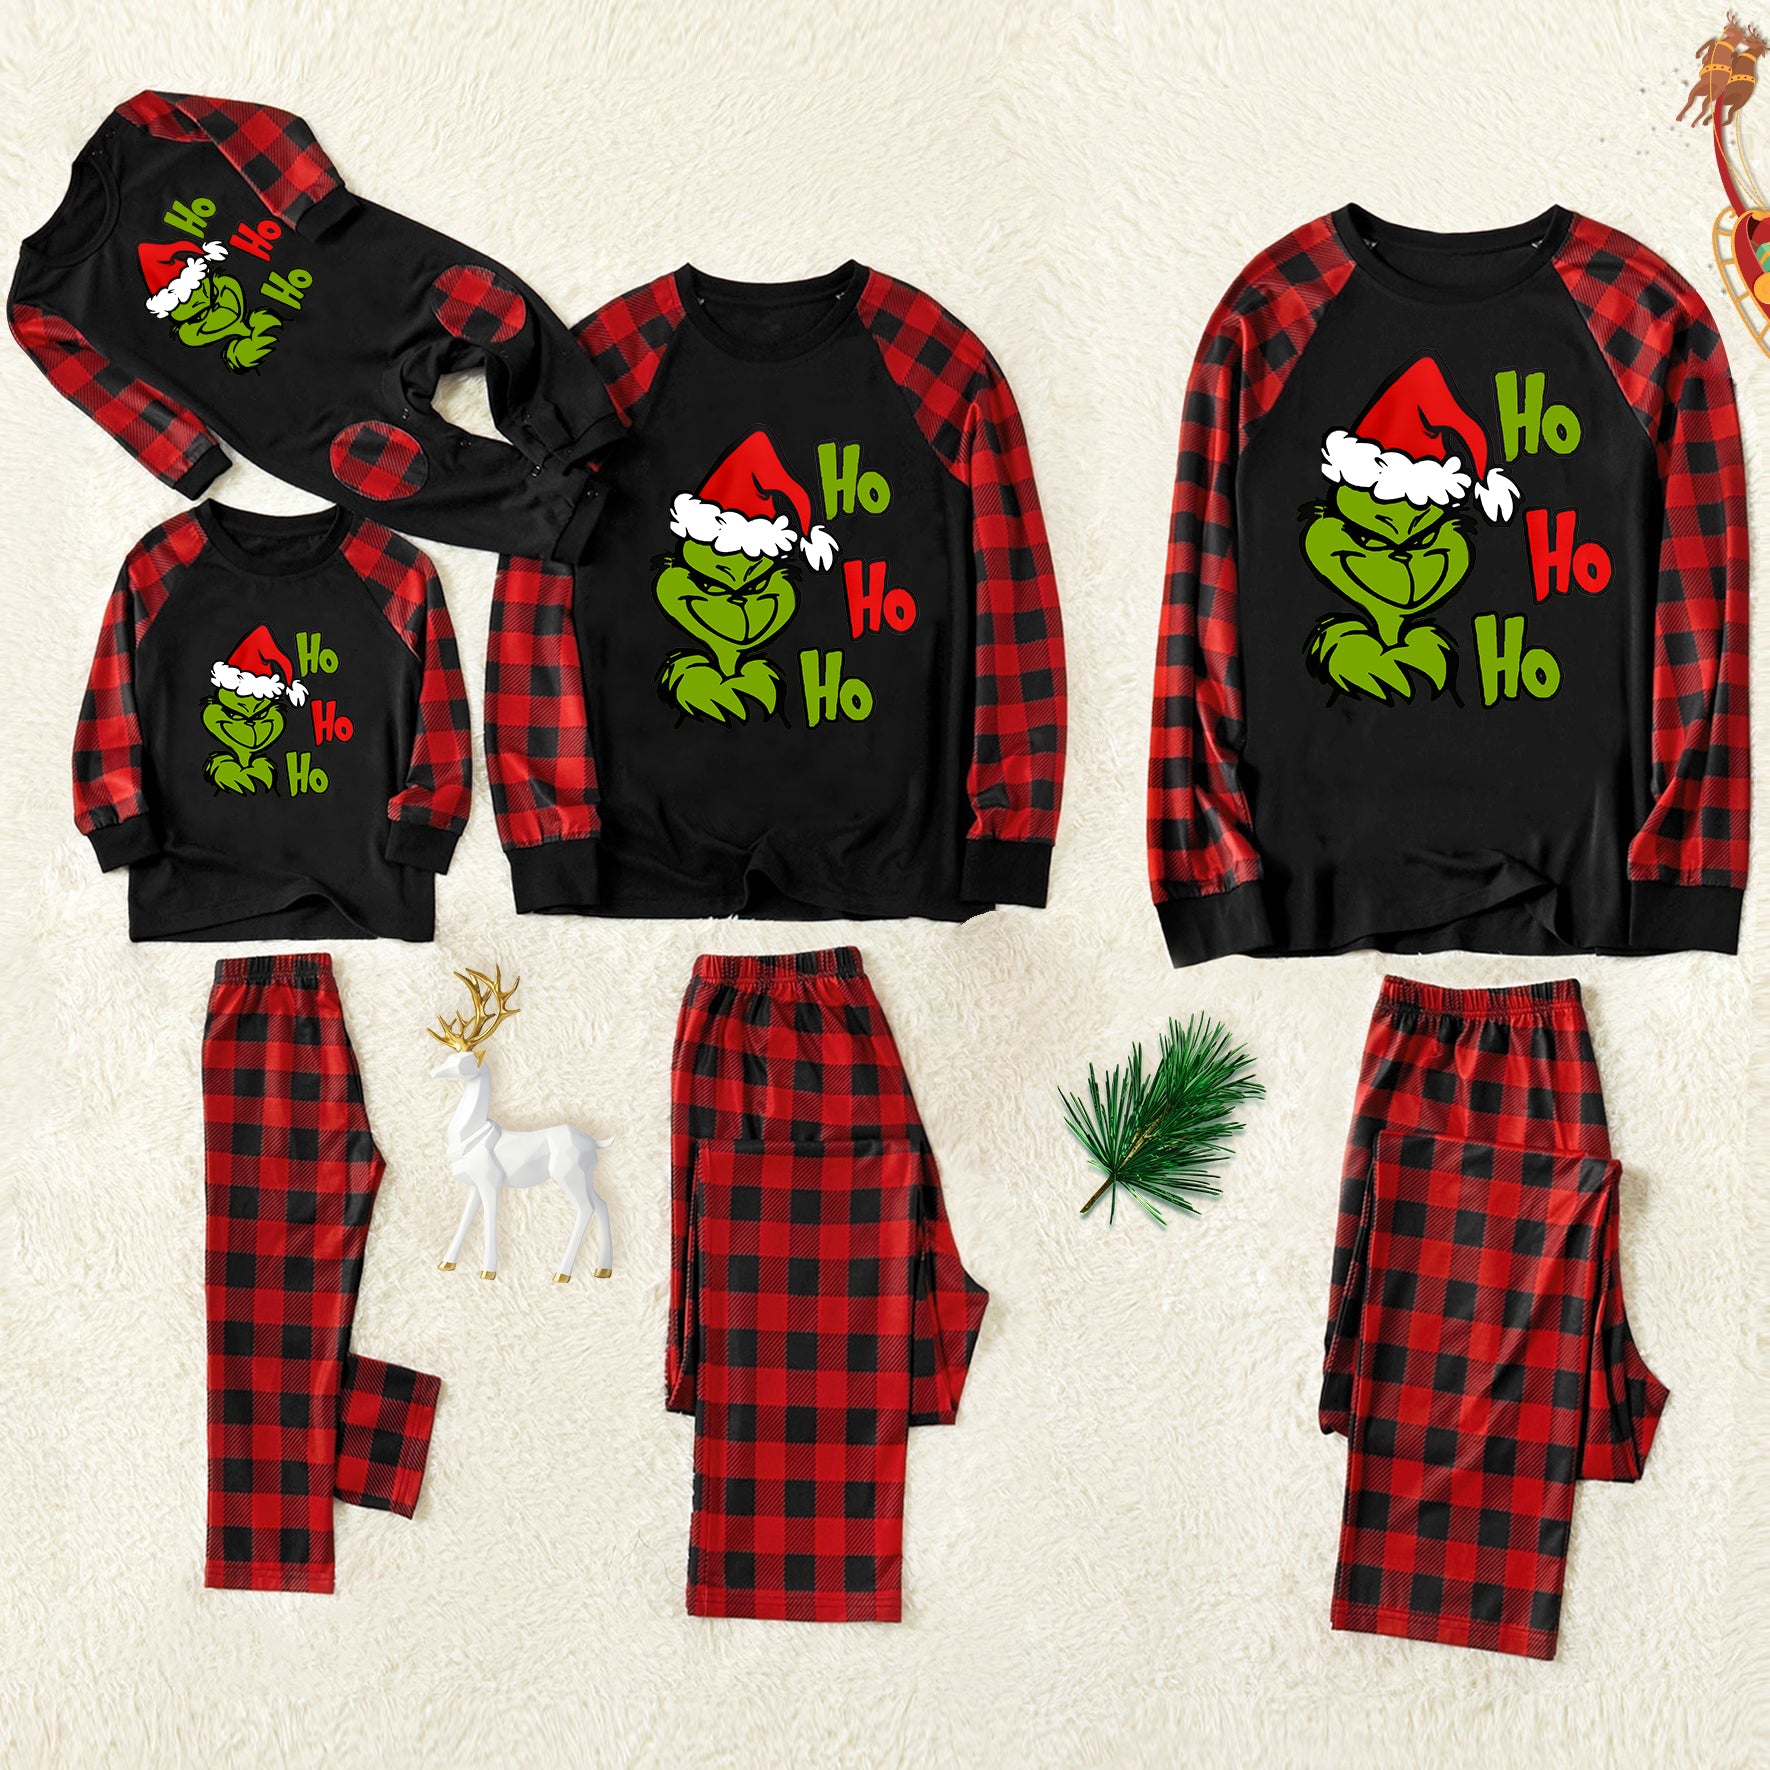 Christmas Cute Cartoon and ‘HO HO HO’ Letter Print Contrast Black top and Black & Red Plaid Pants Family Matching Pajamas Set With Dog Bandana